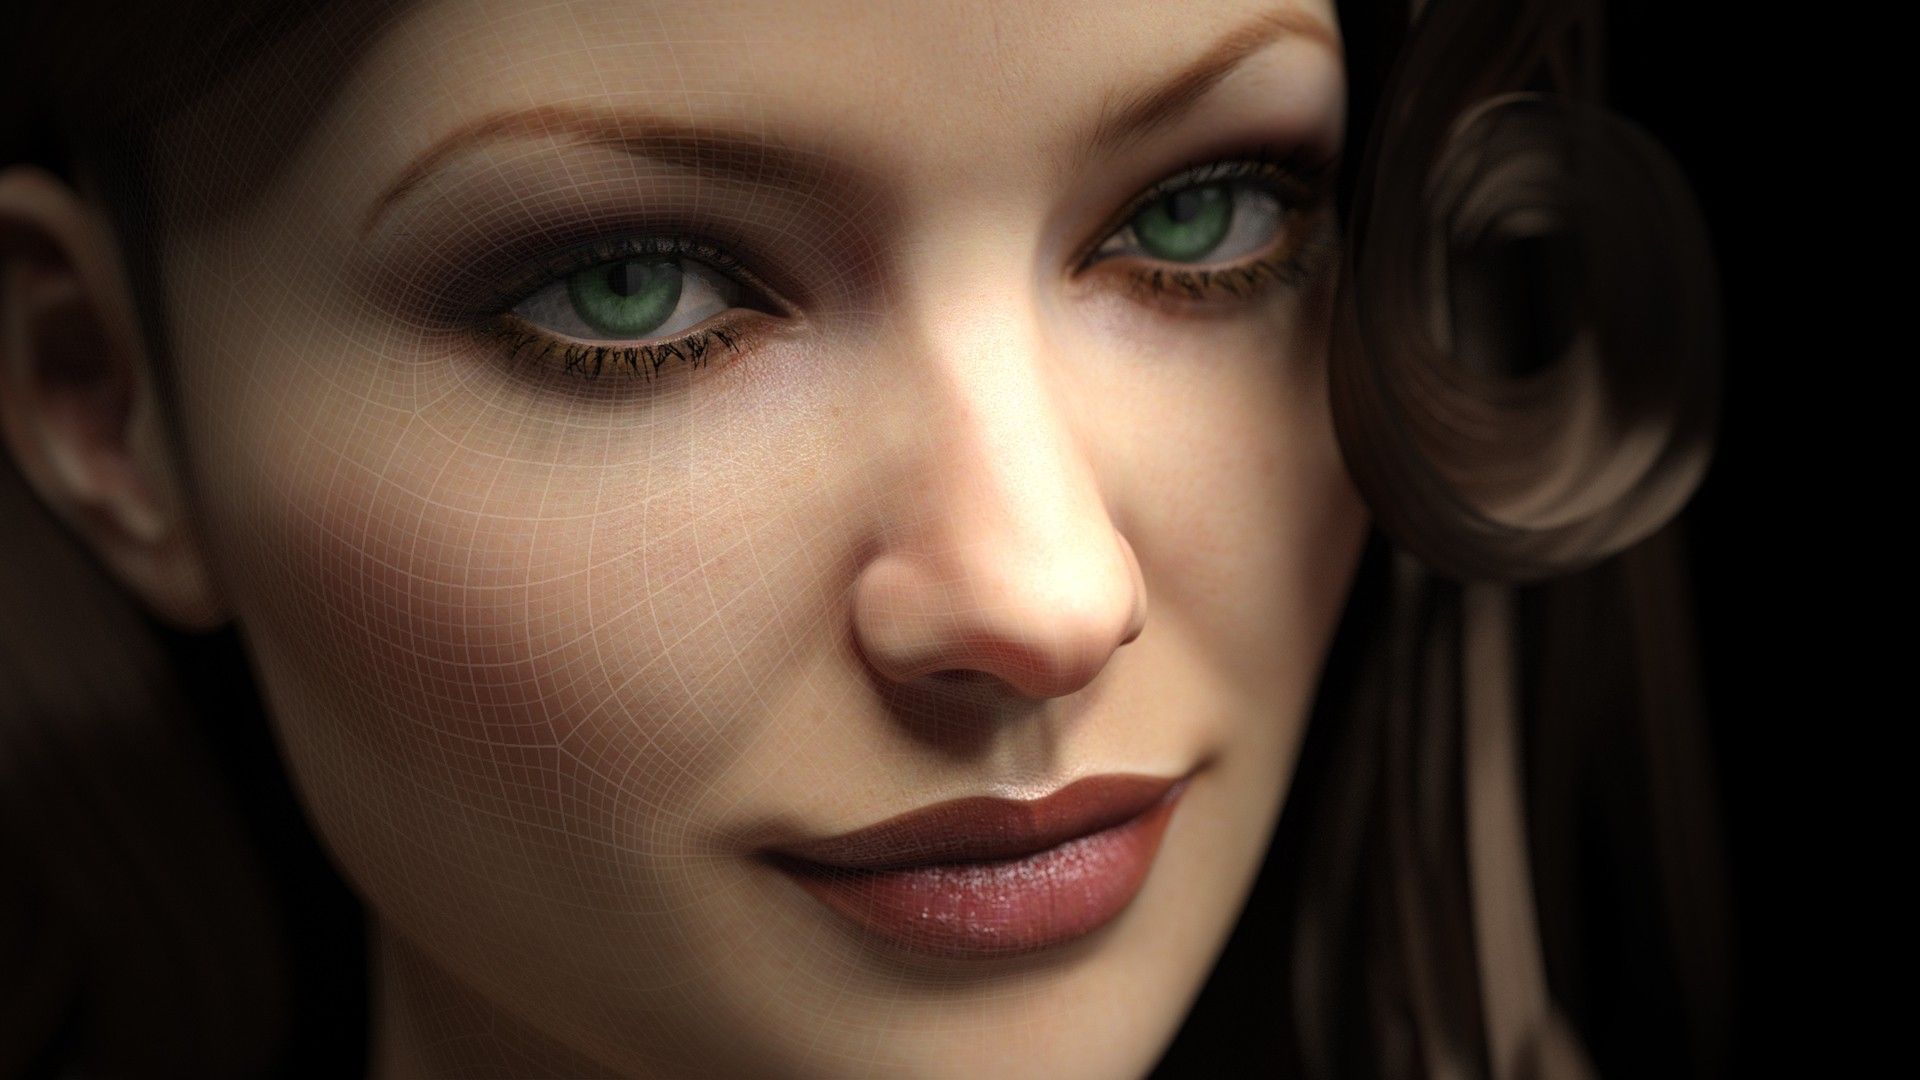 Women Digital Art Portrait Face CGi 3D Looking At Viewer Green Eyes Black Background Nets Square Ren Wallpaper:1920x1080